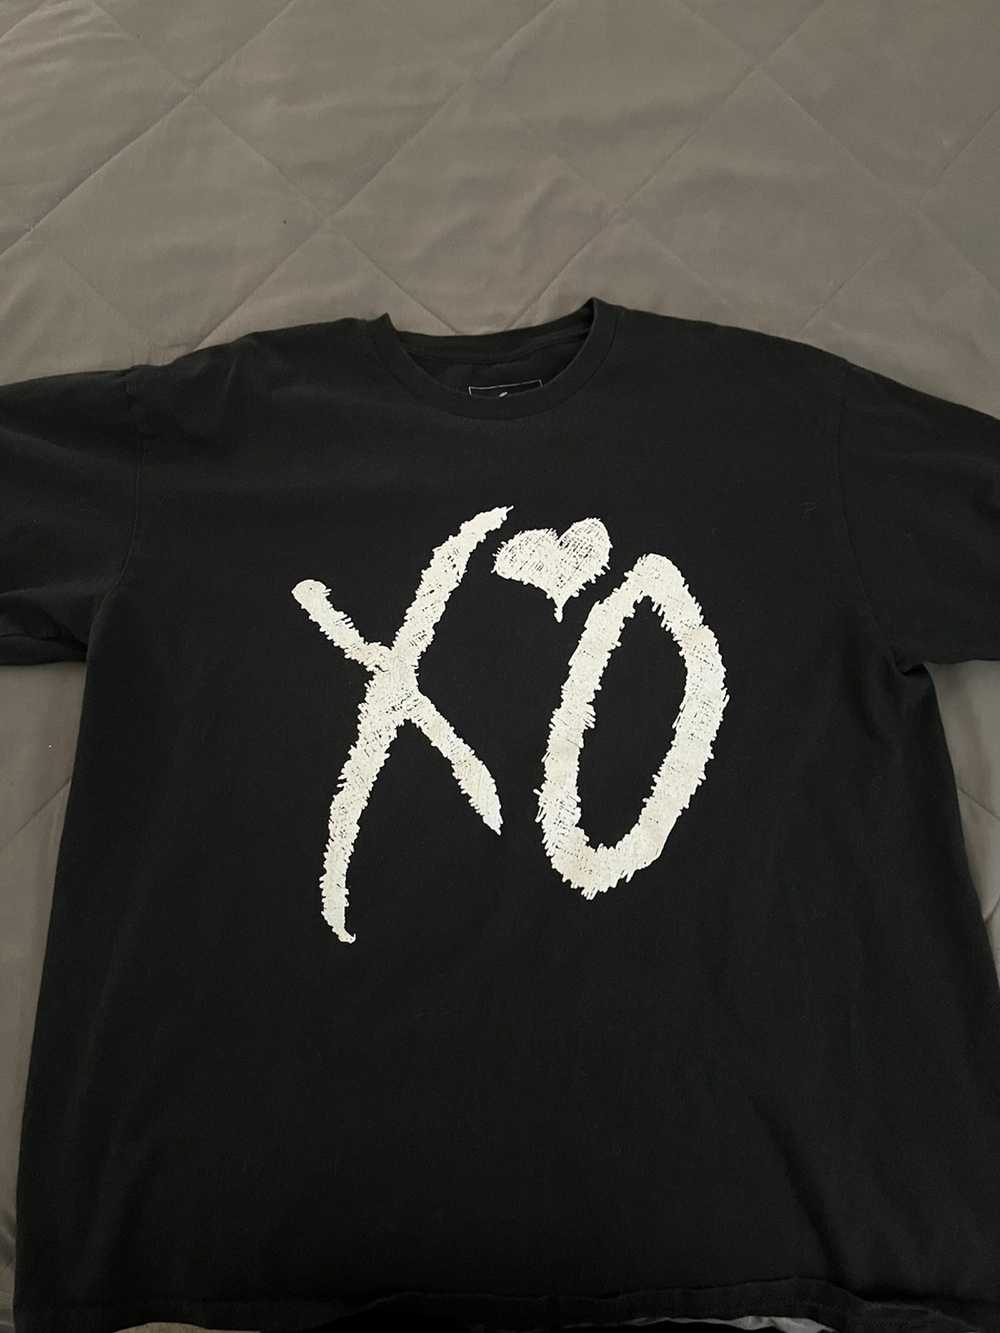 The Weeknd × XO the weeknd xo logo tee - image 1